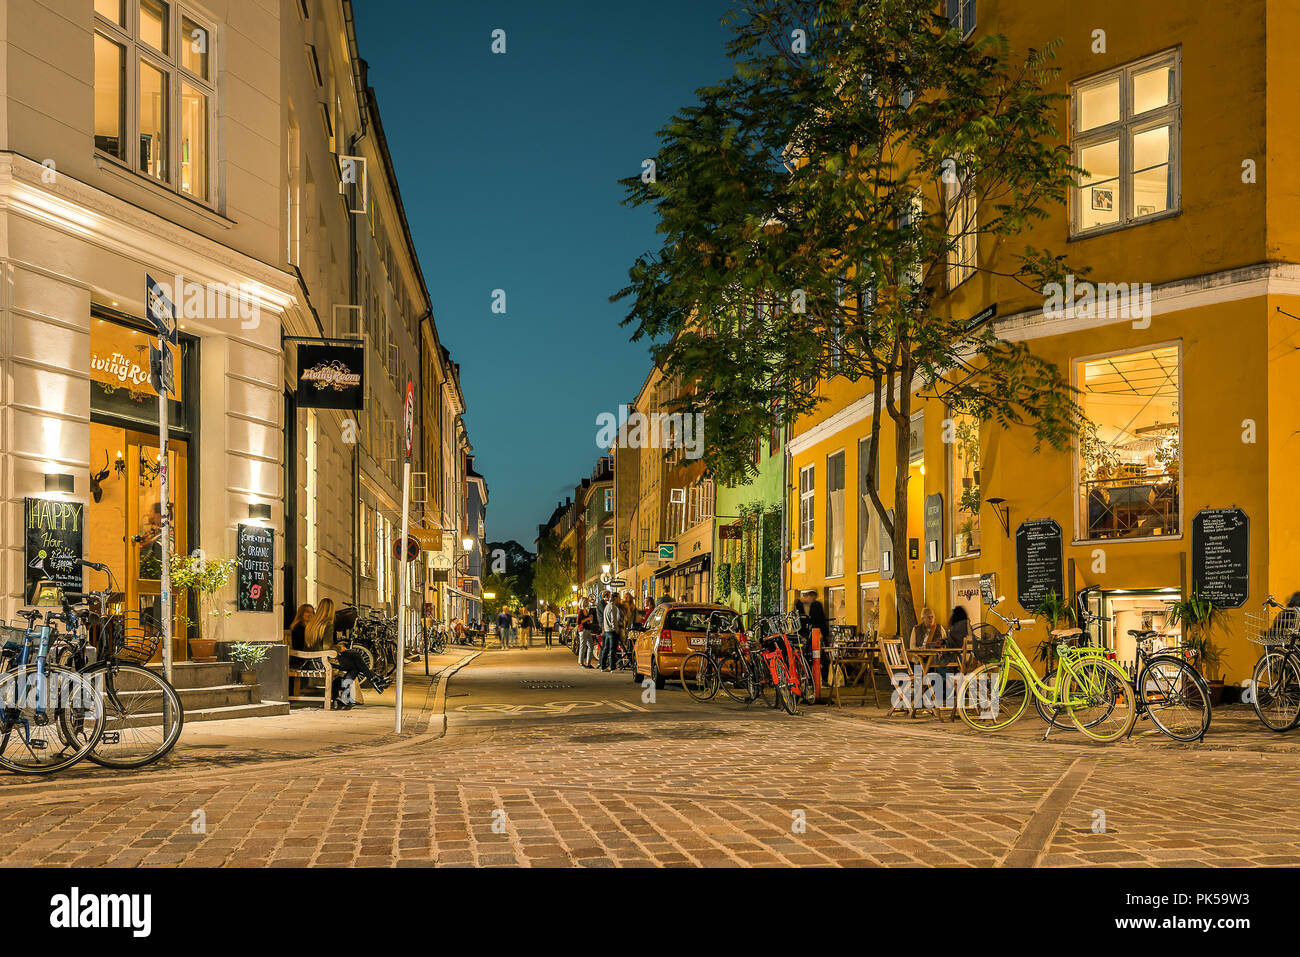 Copenhagen street lights stock photography images - Alamy